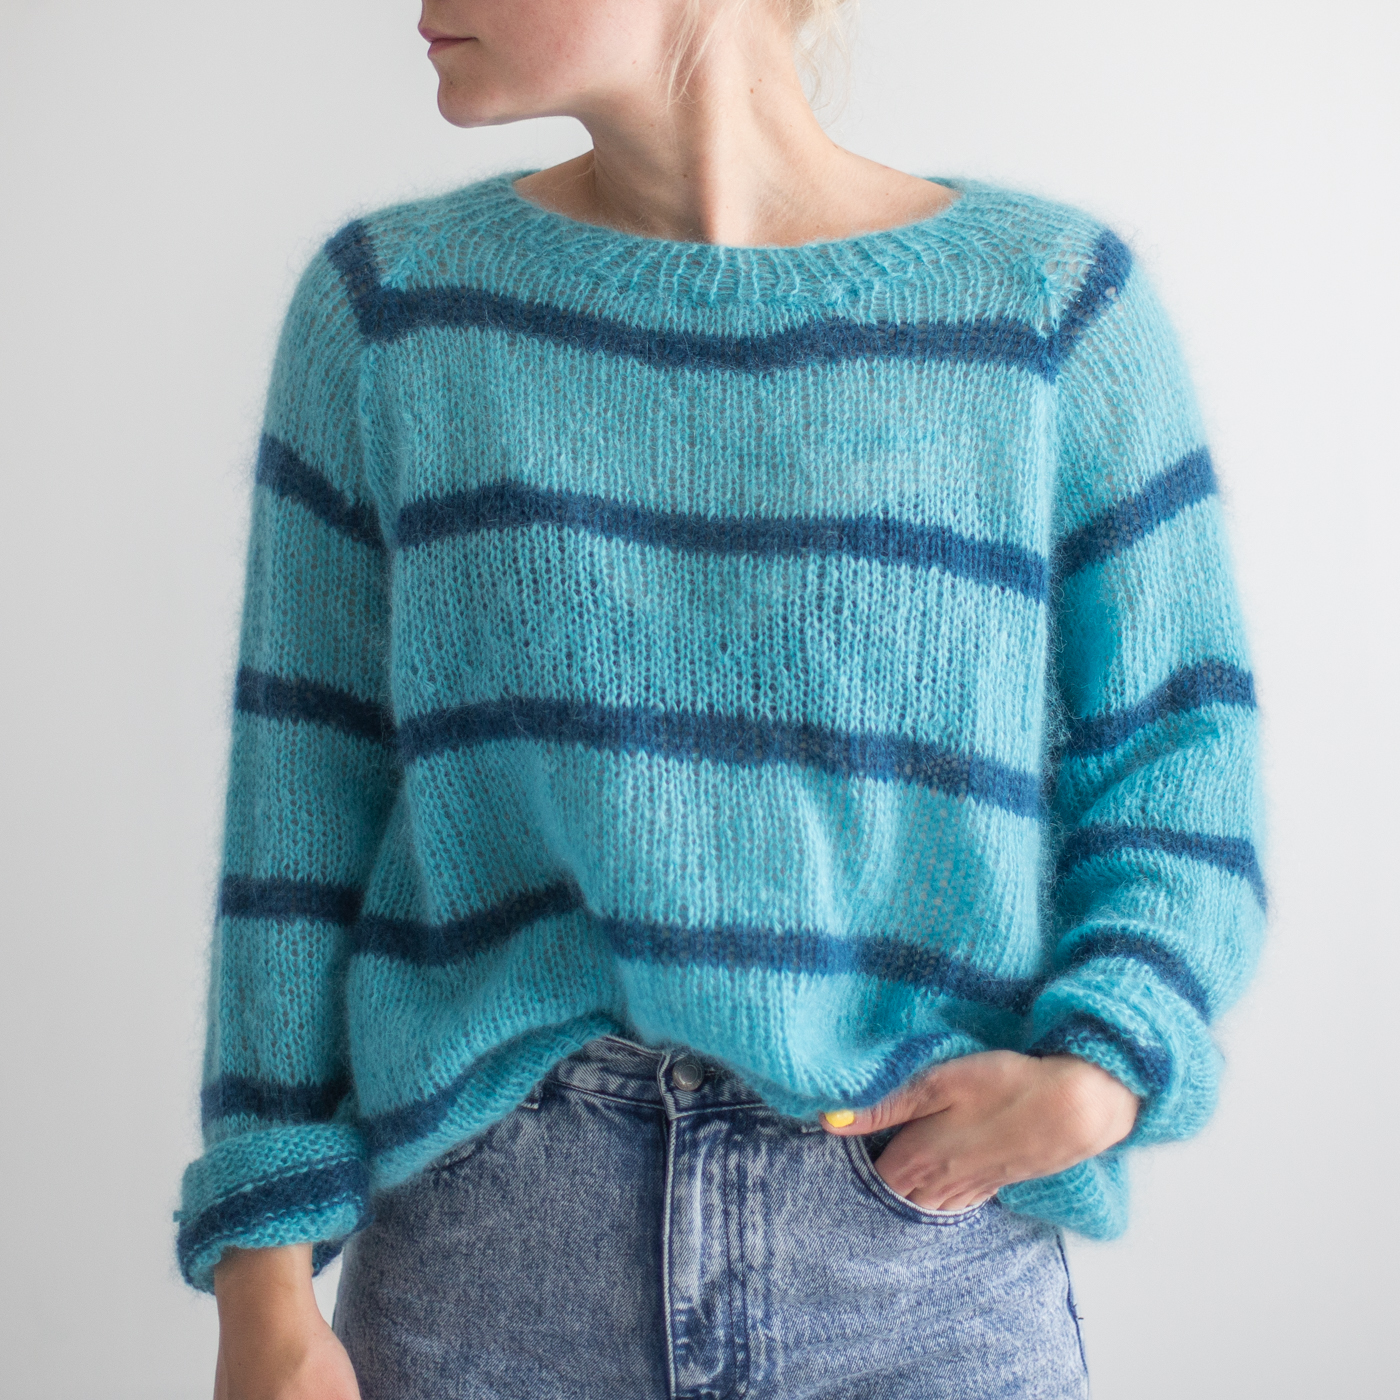 stripe jumper knitting pattern - Heysailor! | Striped mohair sweater knittingpattern - by HipKnitShop - 26/06/2018